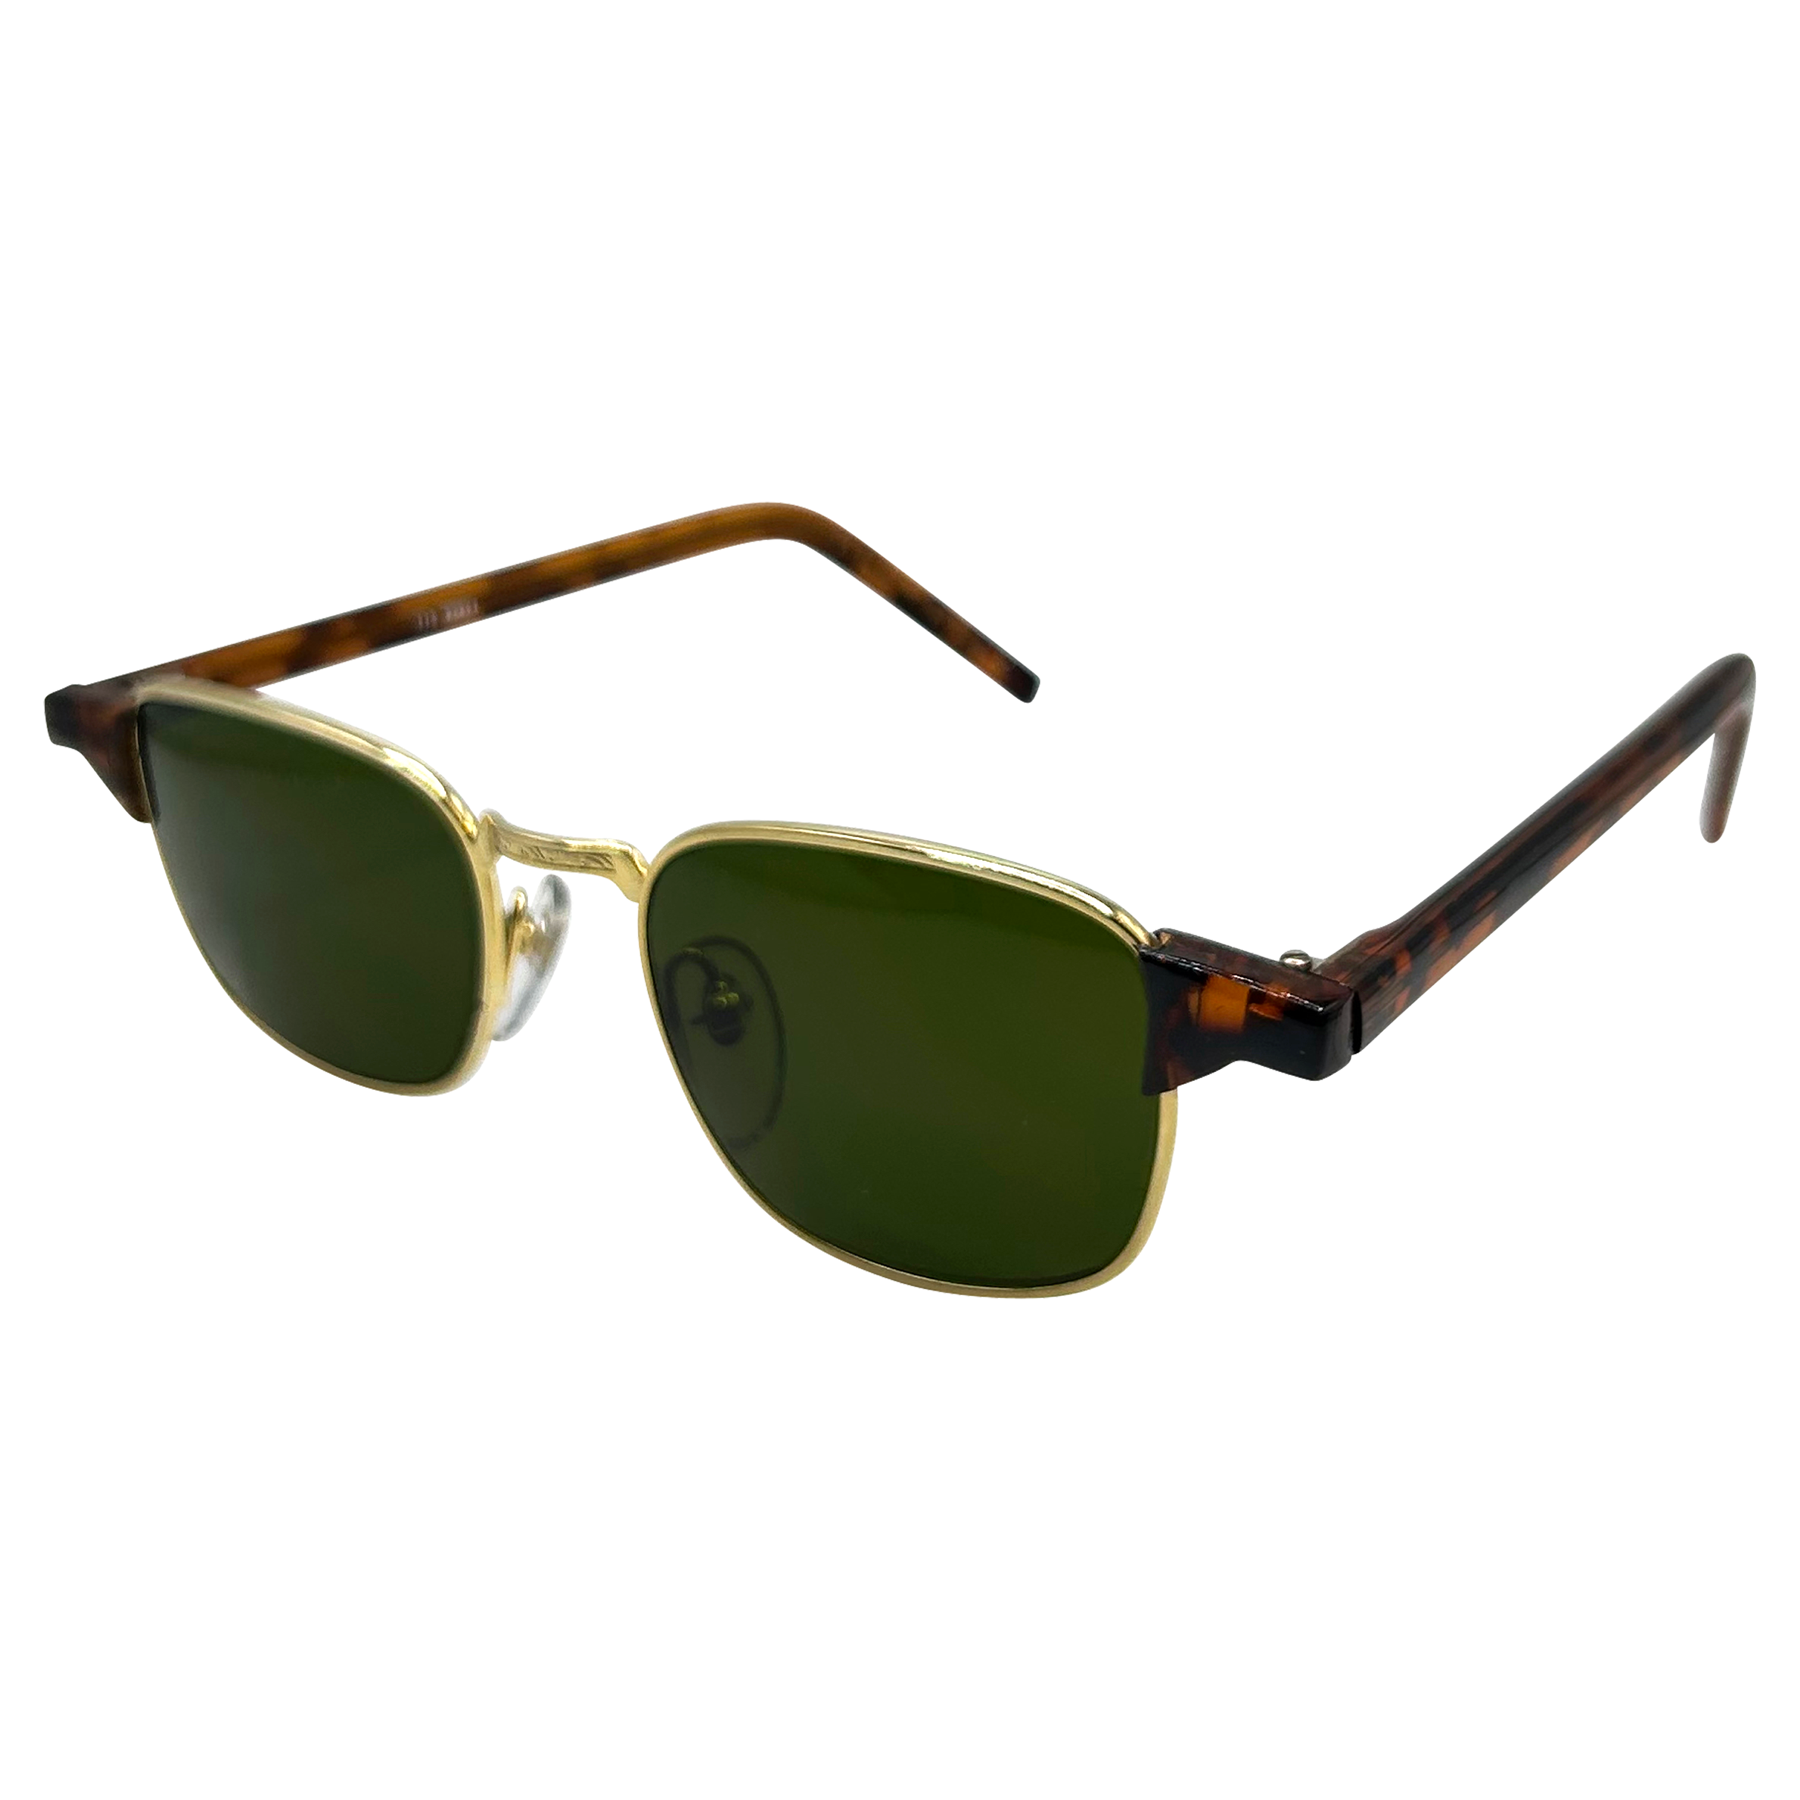 AILERON Tortoise Gold/G15 Sunglasses